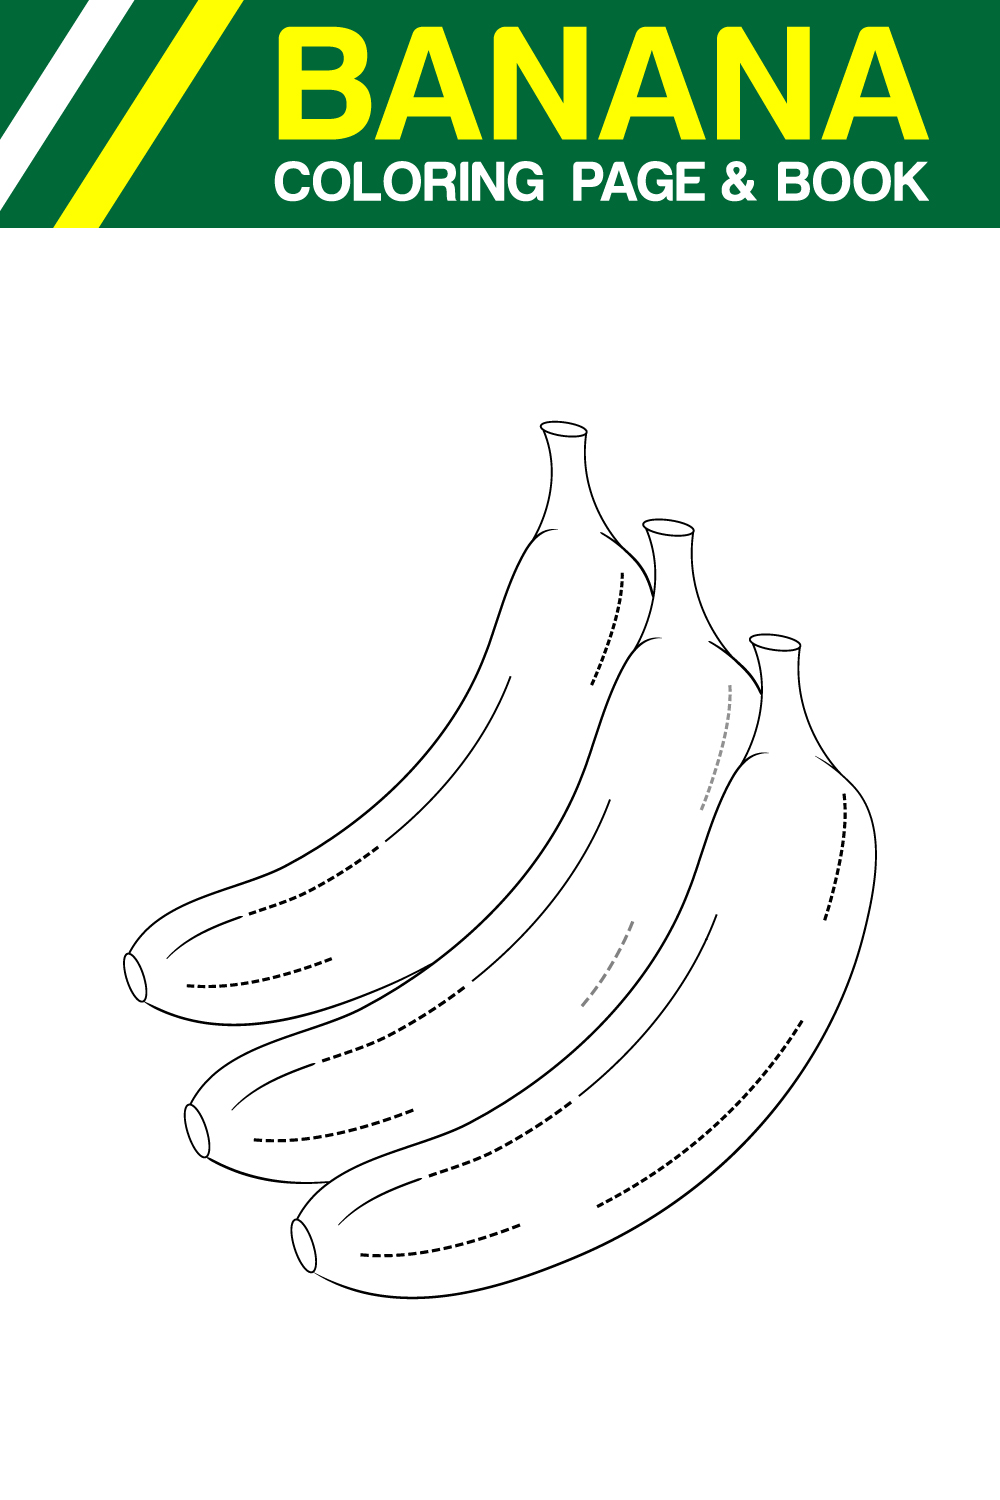 banana line drawing vector illustration pinterest preview image.